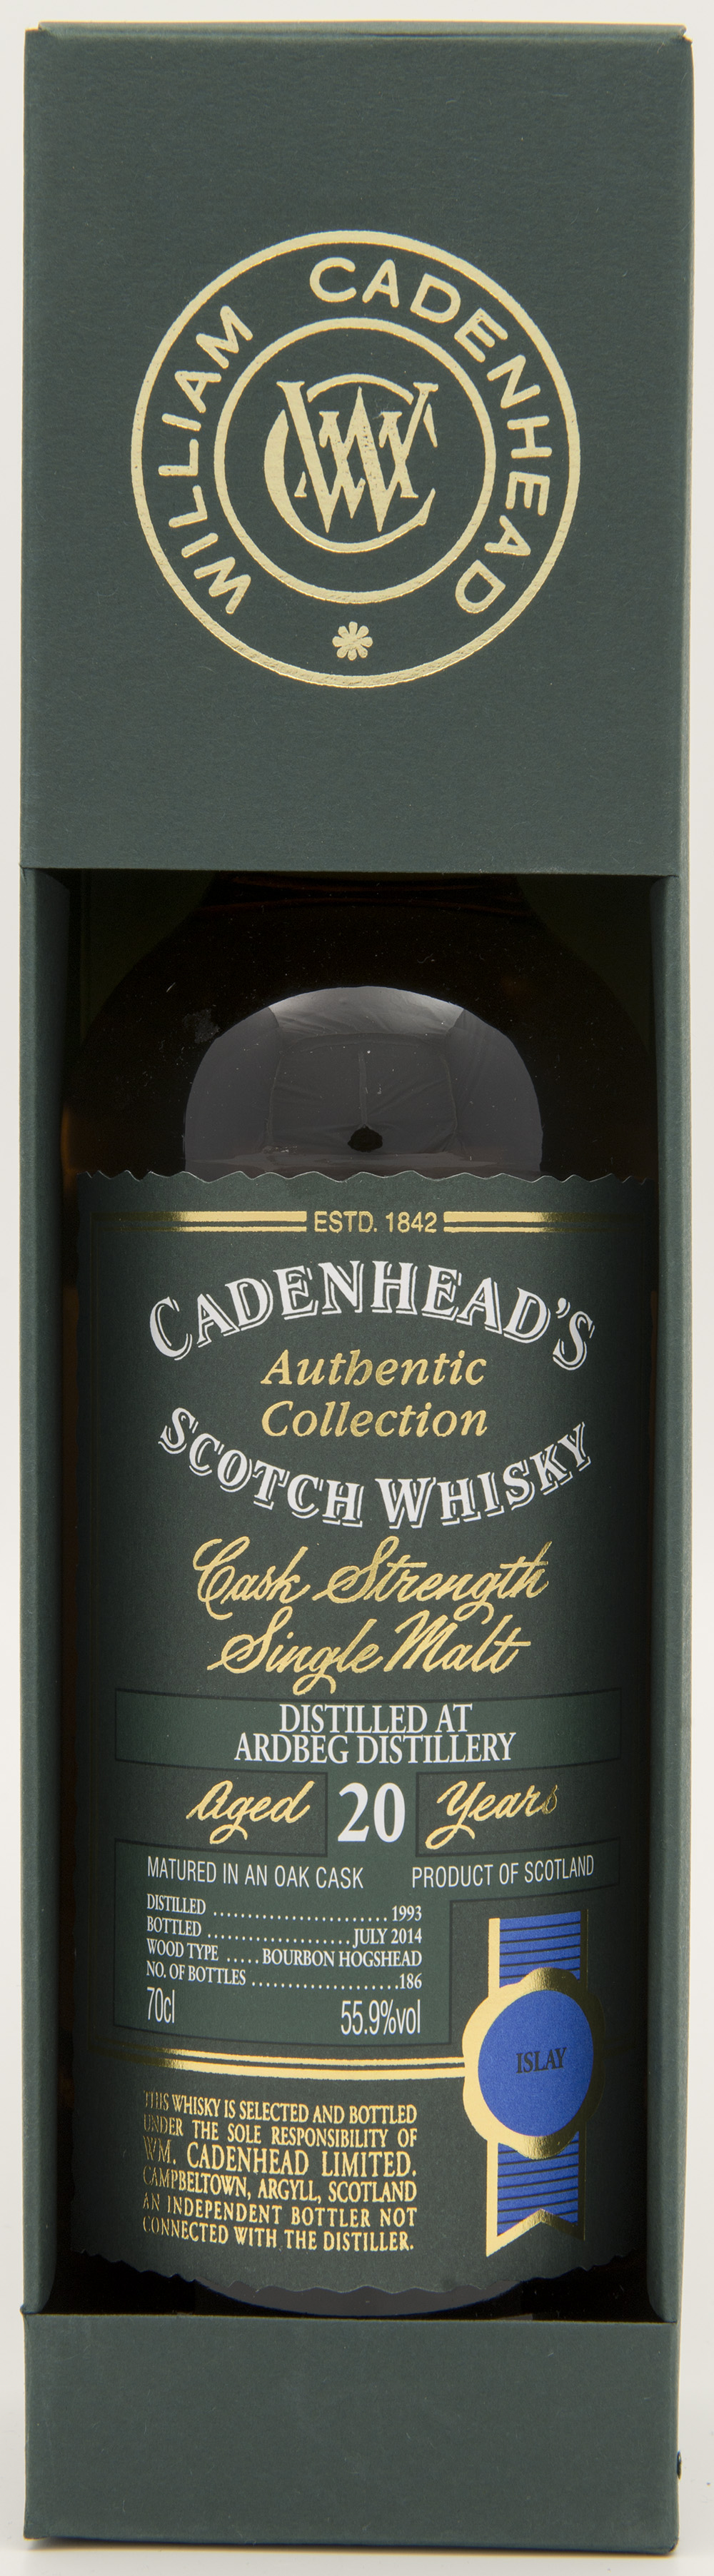 Billede: DSC_4830 - Cadenheads Authentic Collection - Ardbeg 20 years - bottle in box.jpg